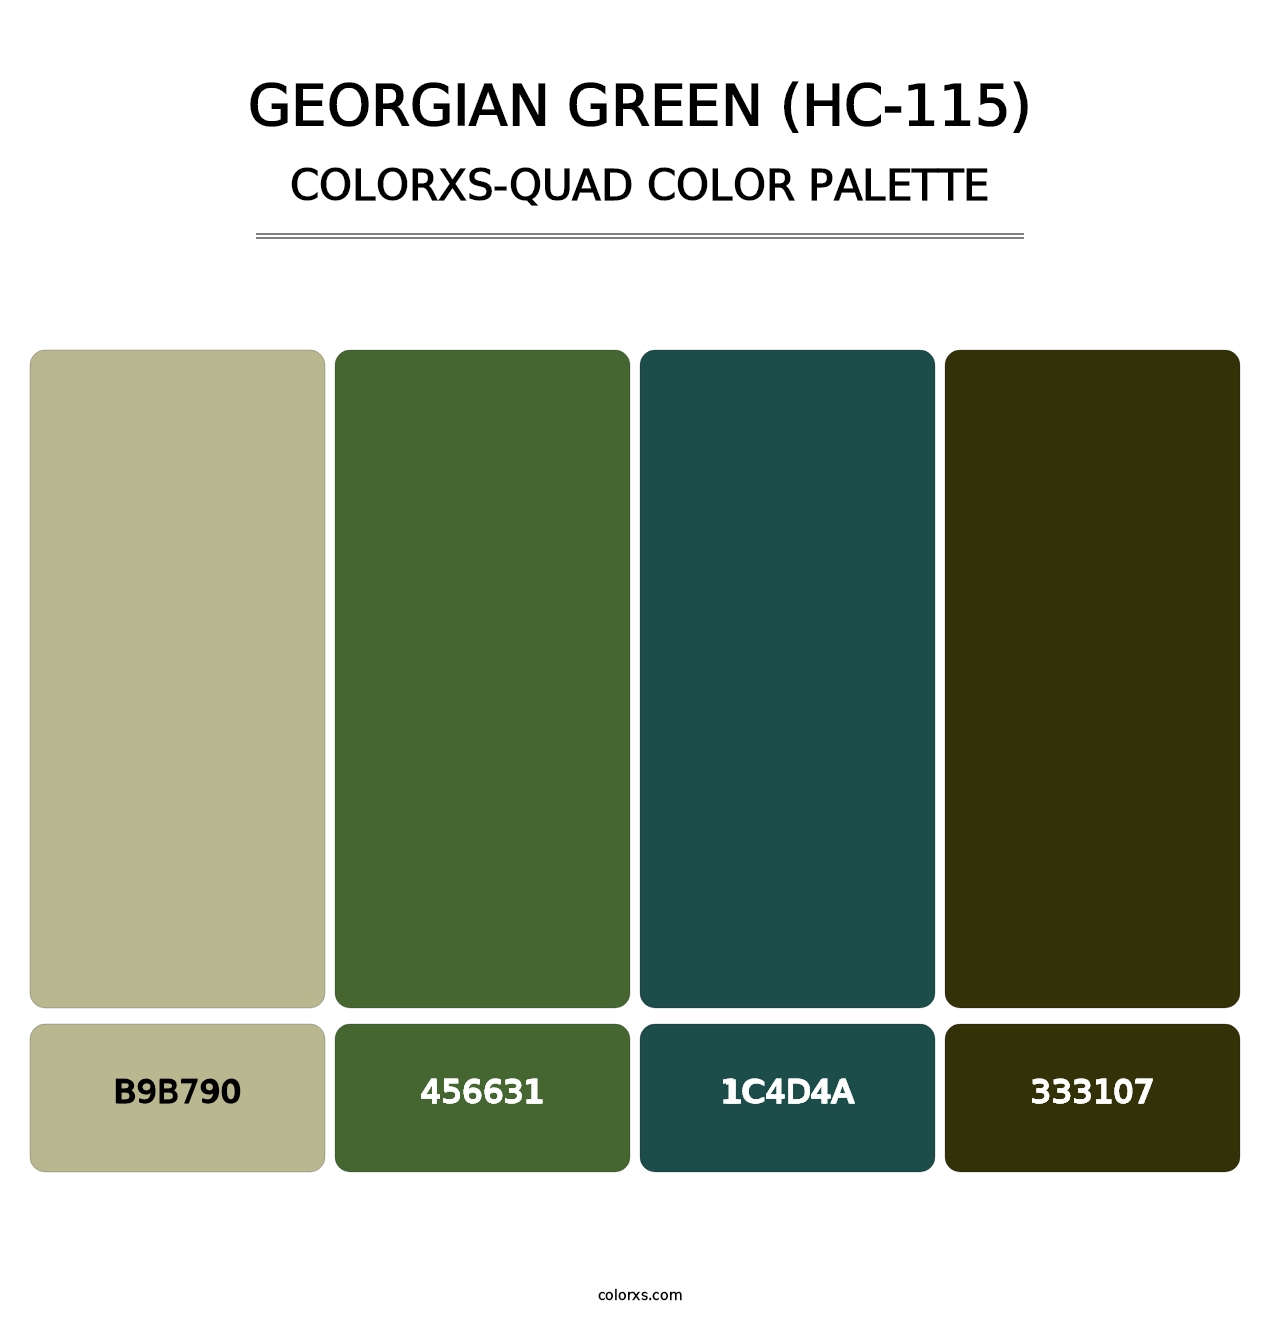 Georgian Green (HC-115) - Colorxs Quad Palette